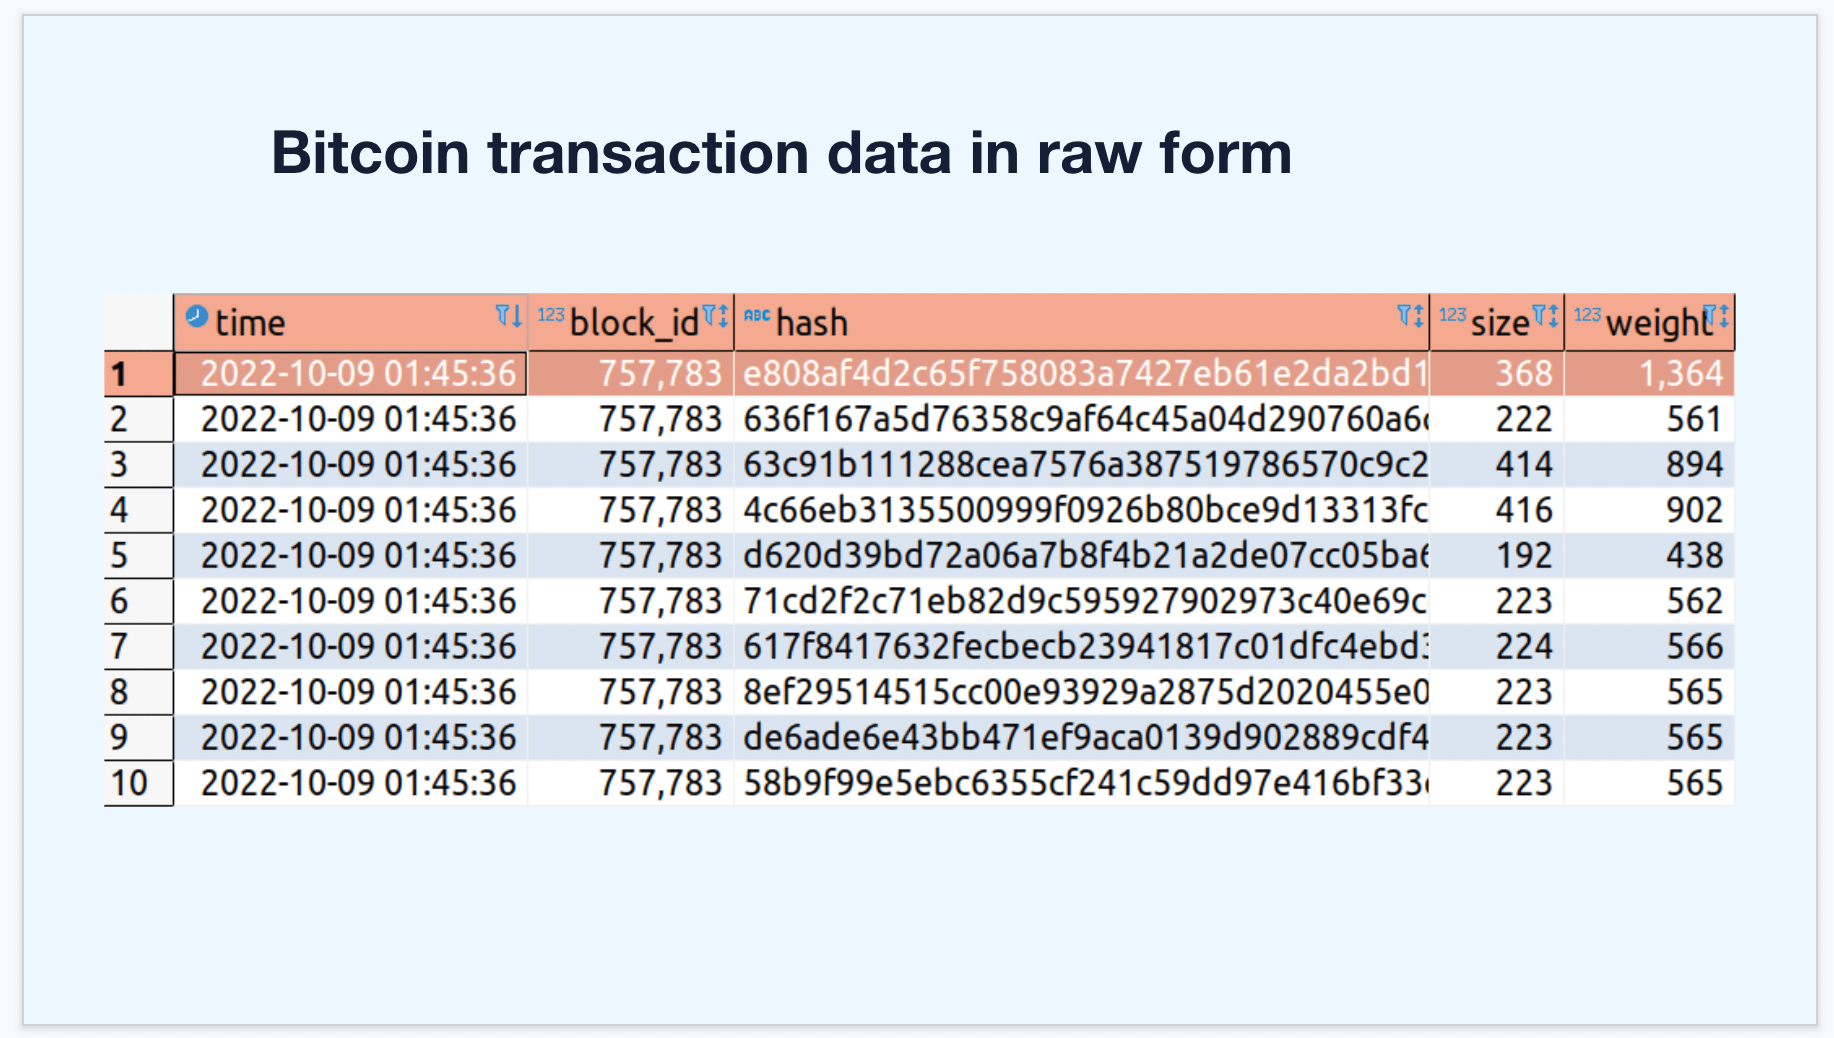 A raw data example of bitcoin transaction data